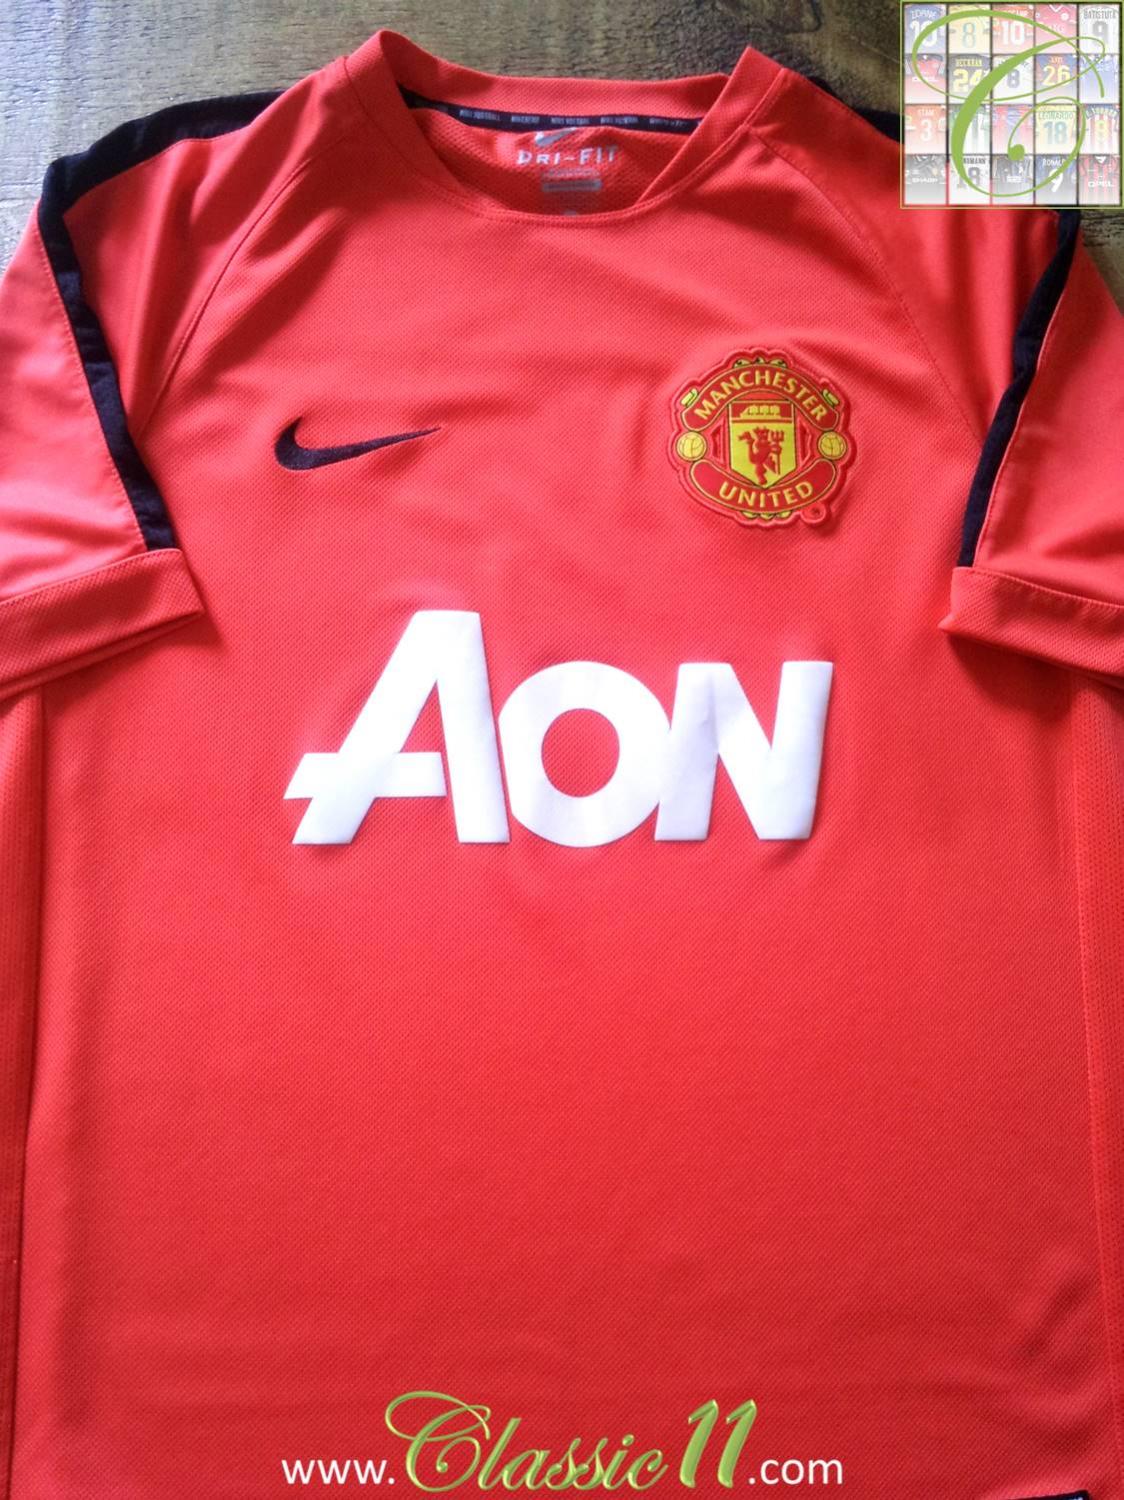 Manchester United Training/Leisure football shirt 2010 - 2011.